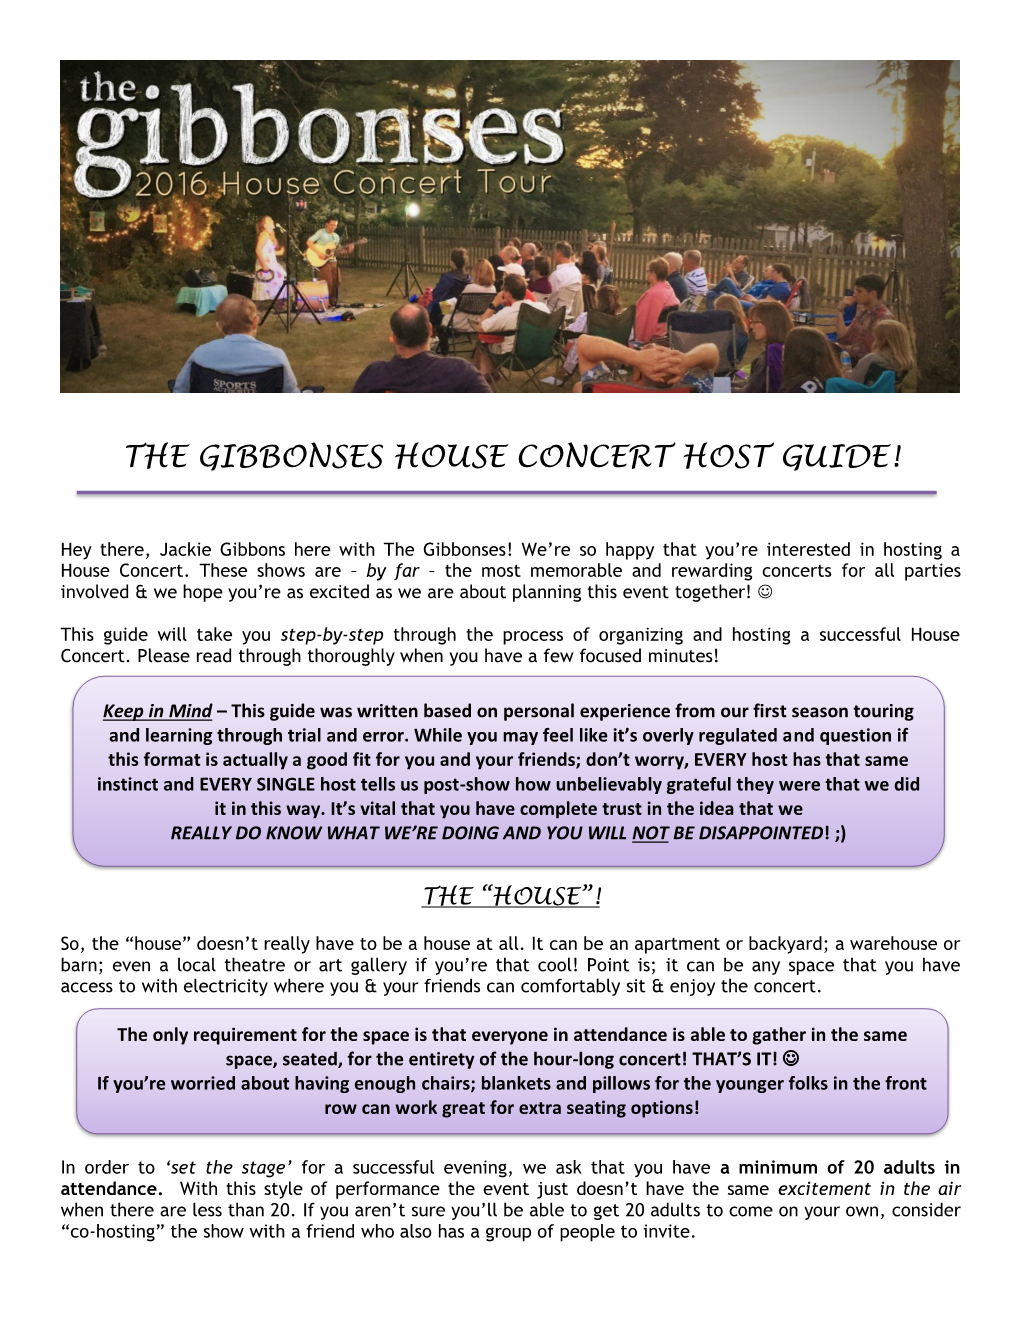 The Gibbonses House Concert Host Guide!